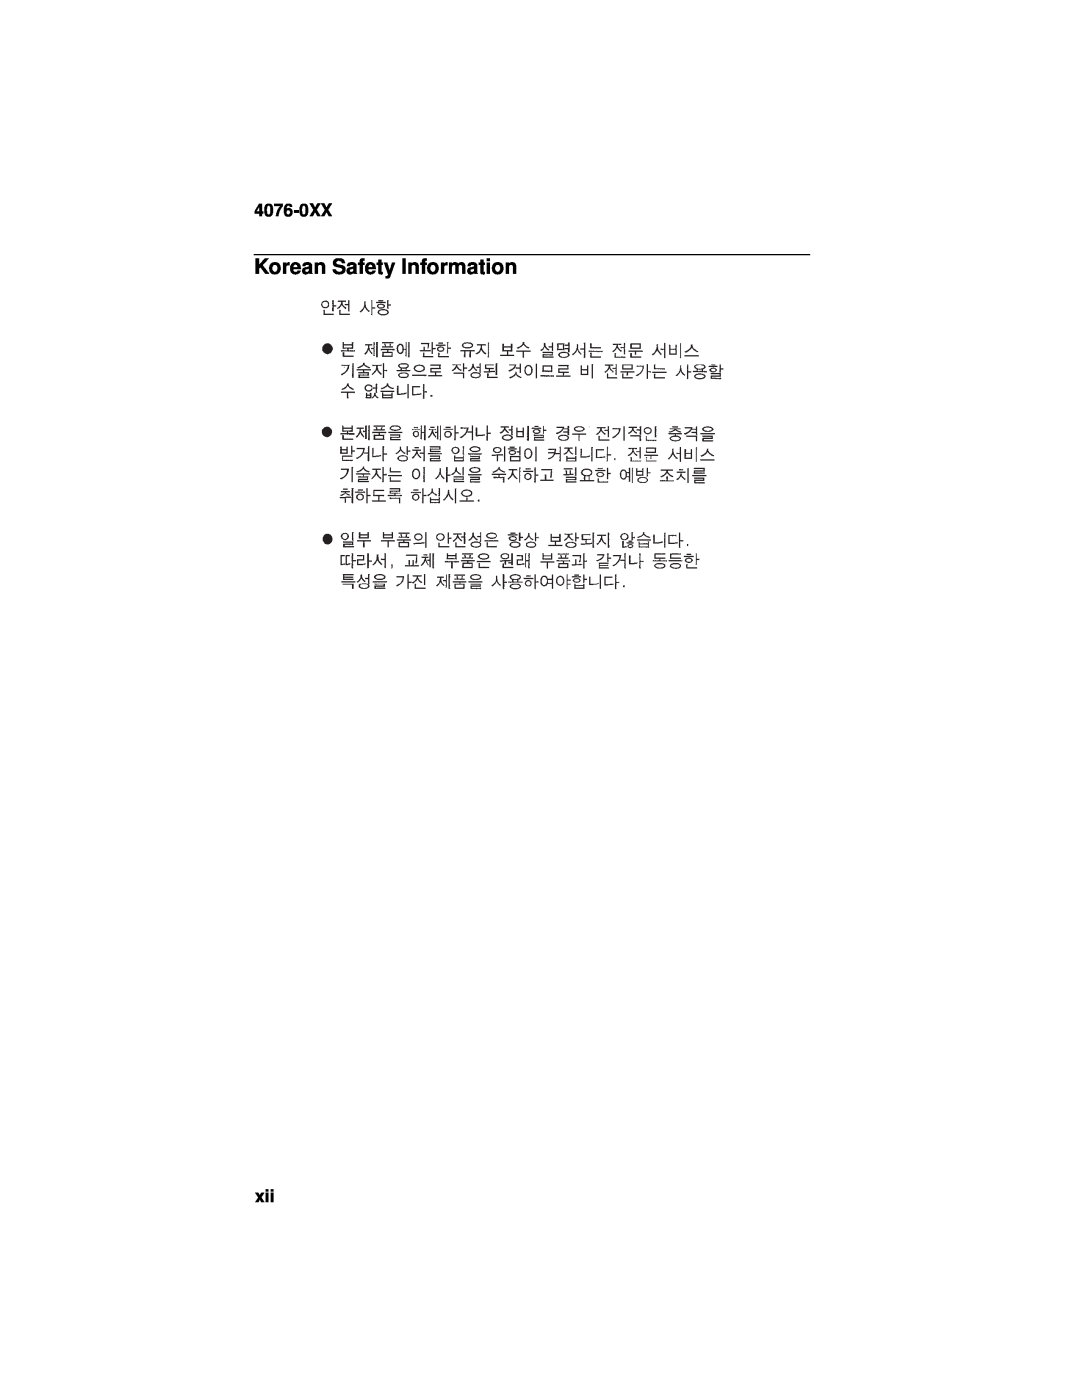 Lexmark 4076-0XX manual Korean Safety Information 